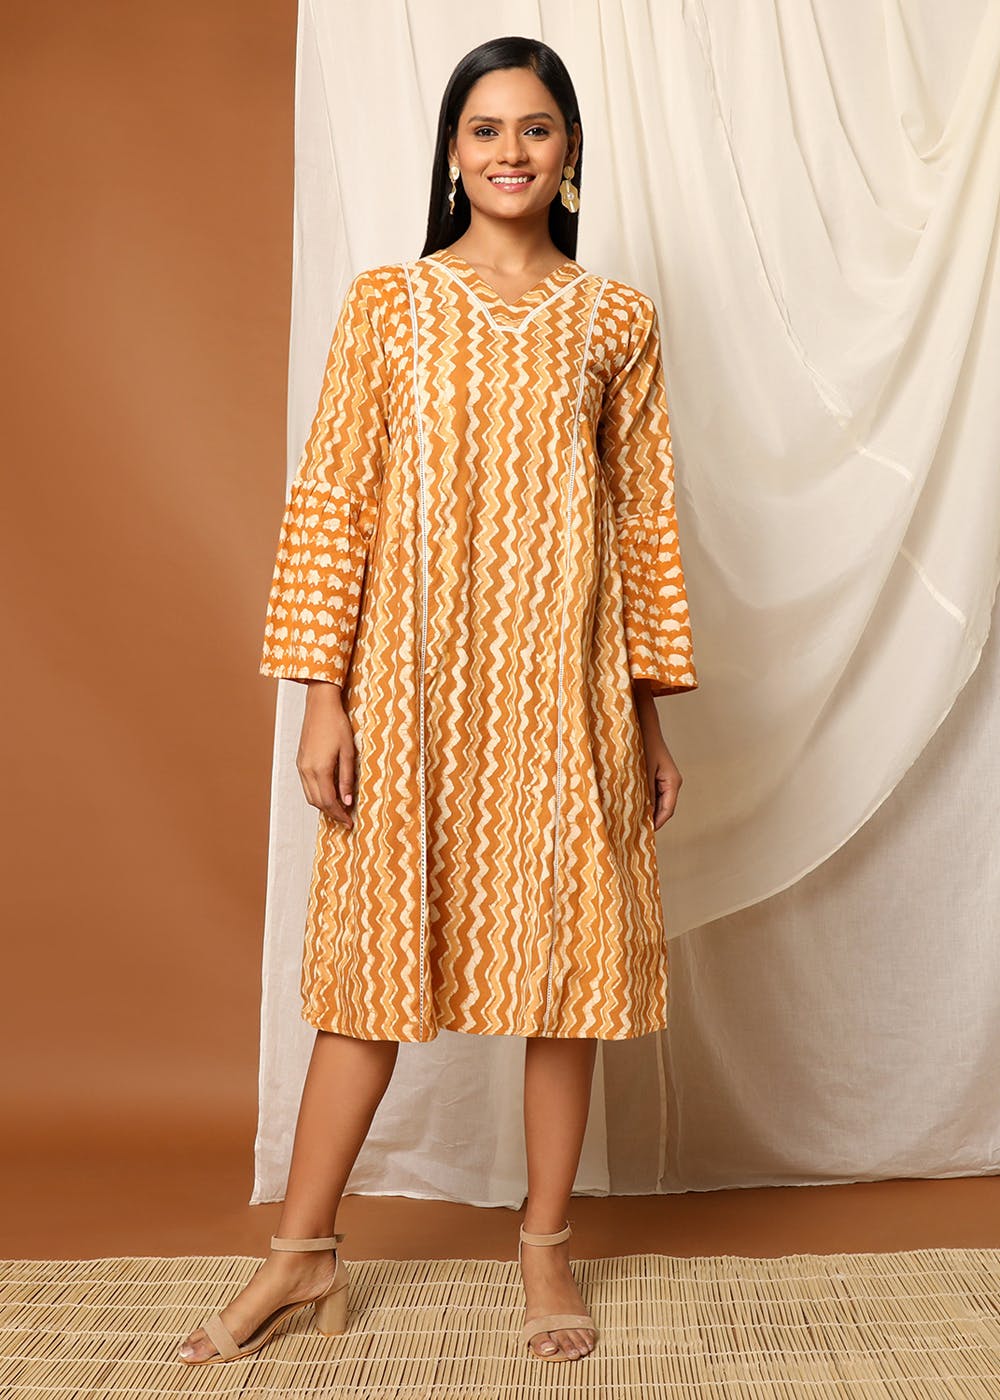 Vanbuy Womens Ethnic Print Layered Tank Dress Sleeveless Summer Casual Mini Sundress 